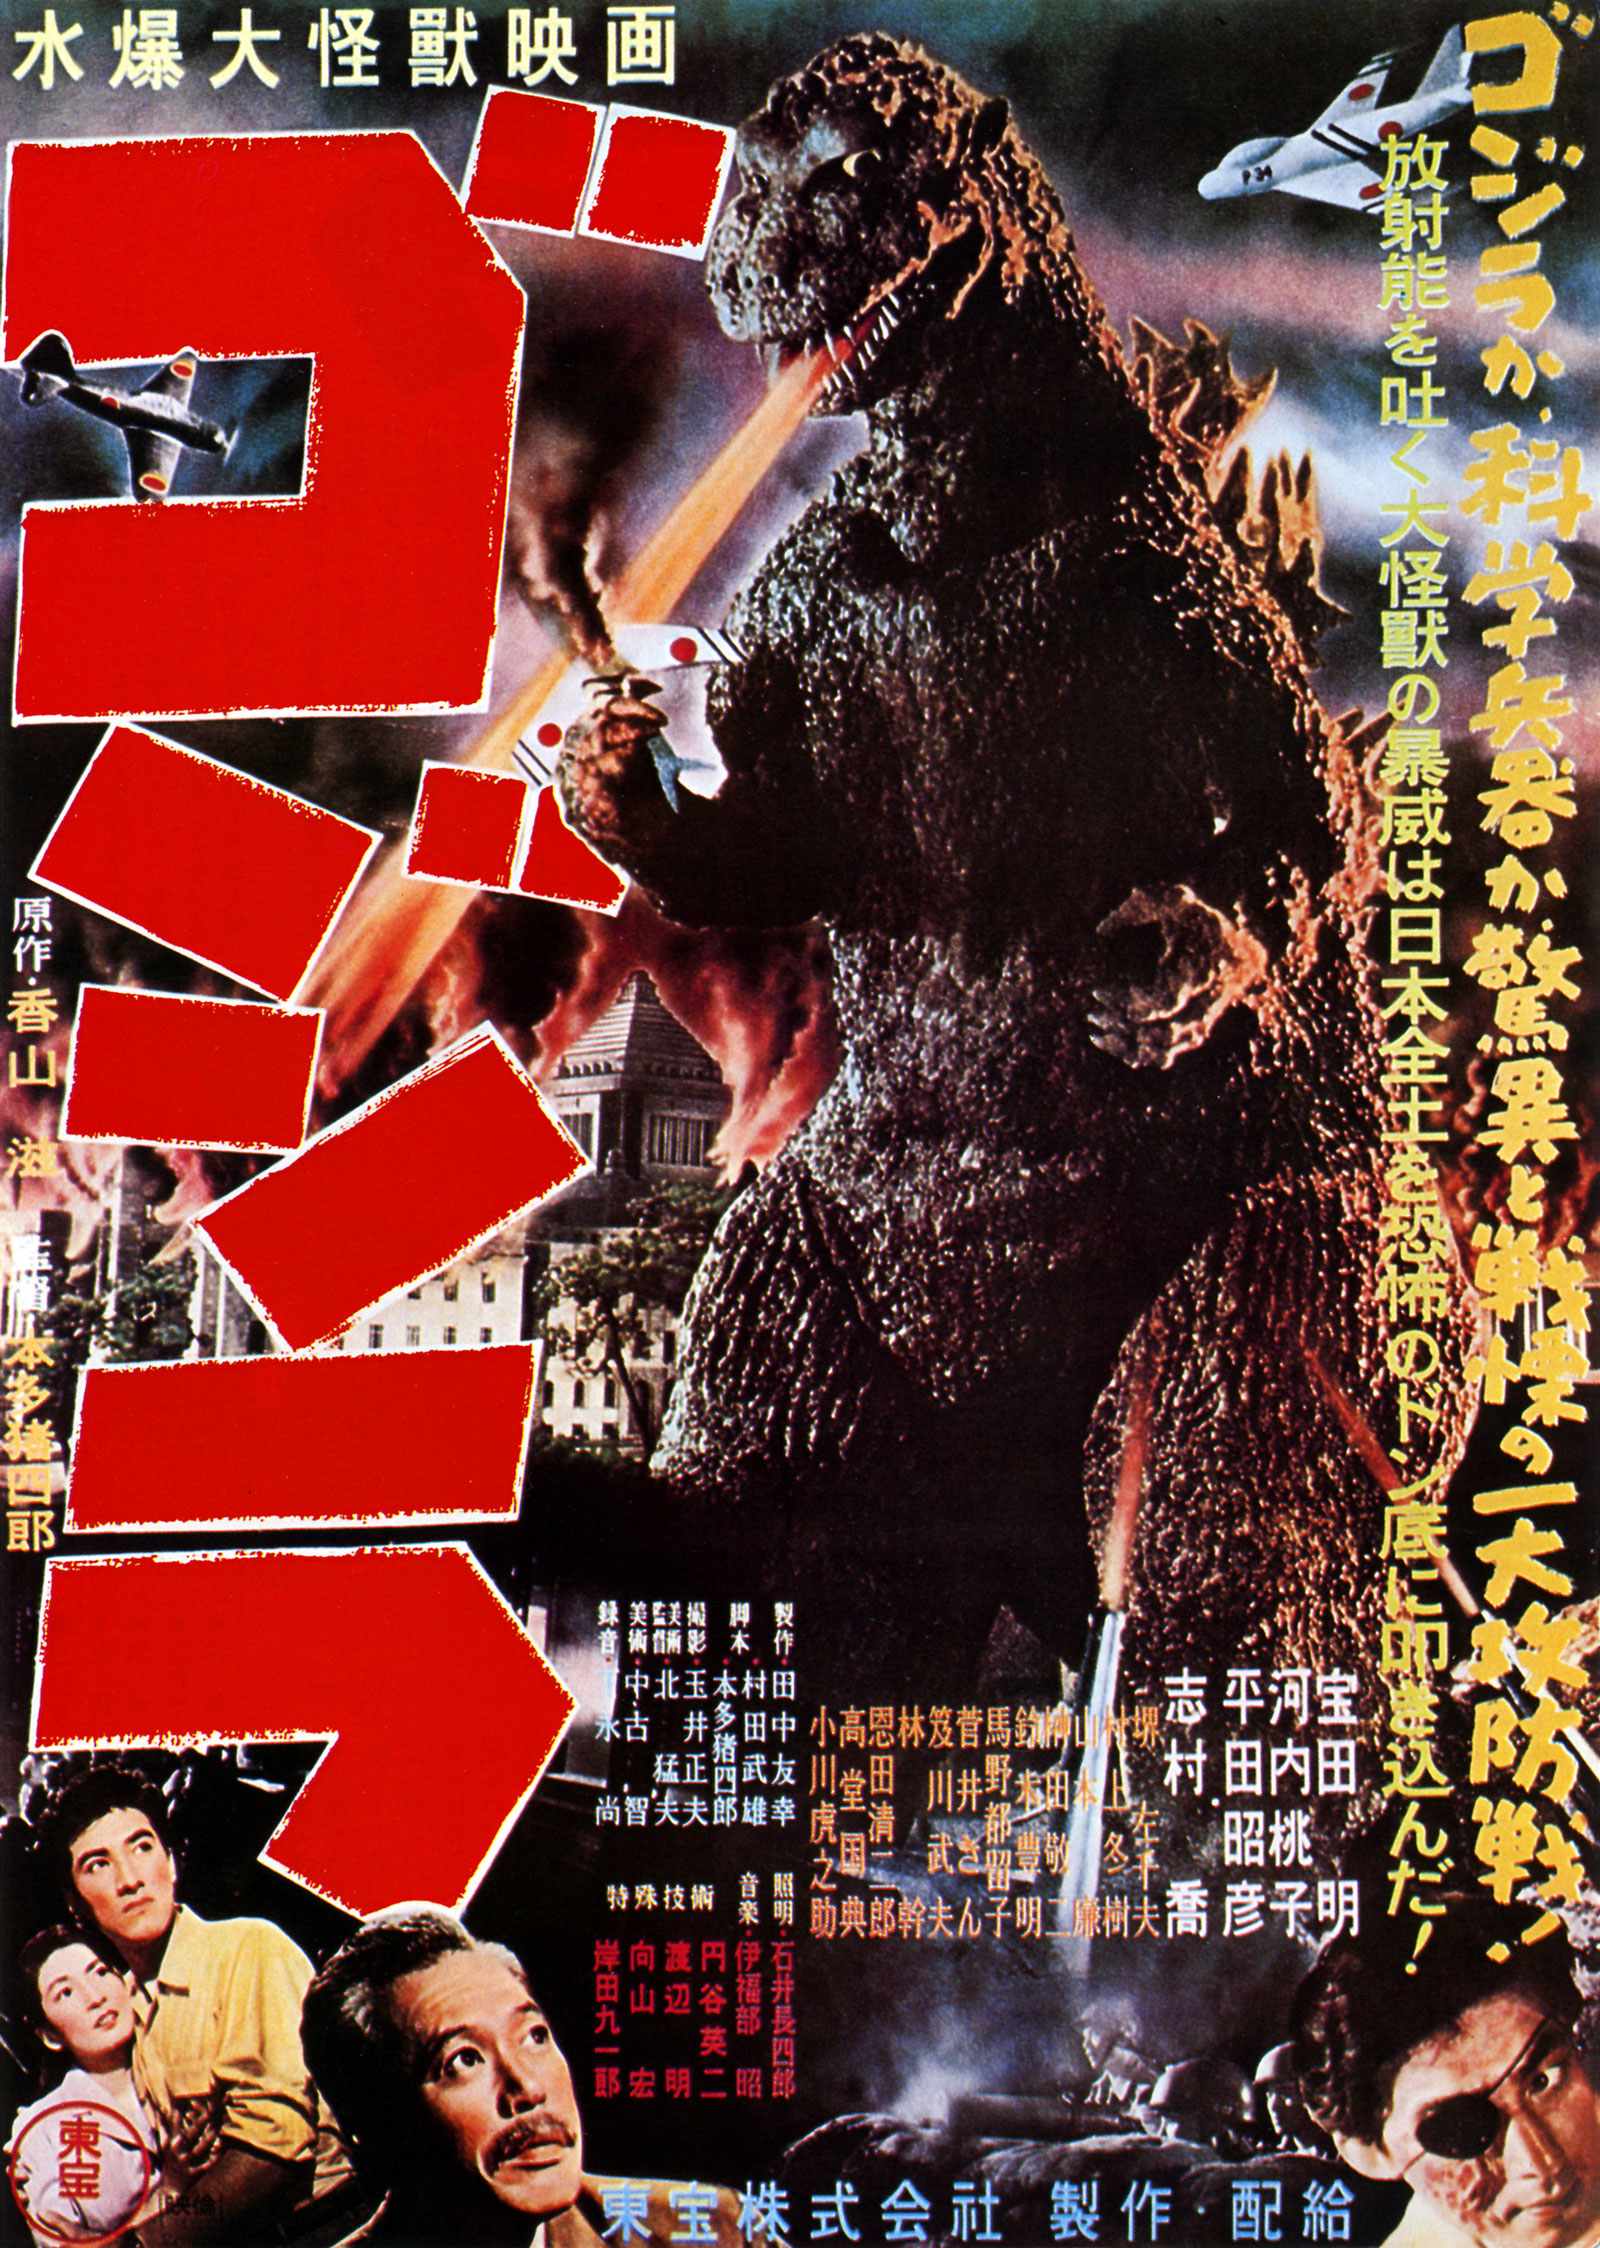 Godzilla 1954 movie poster